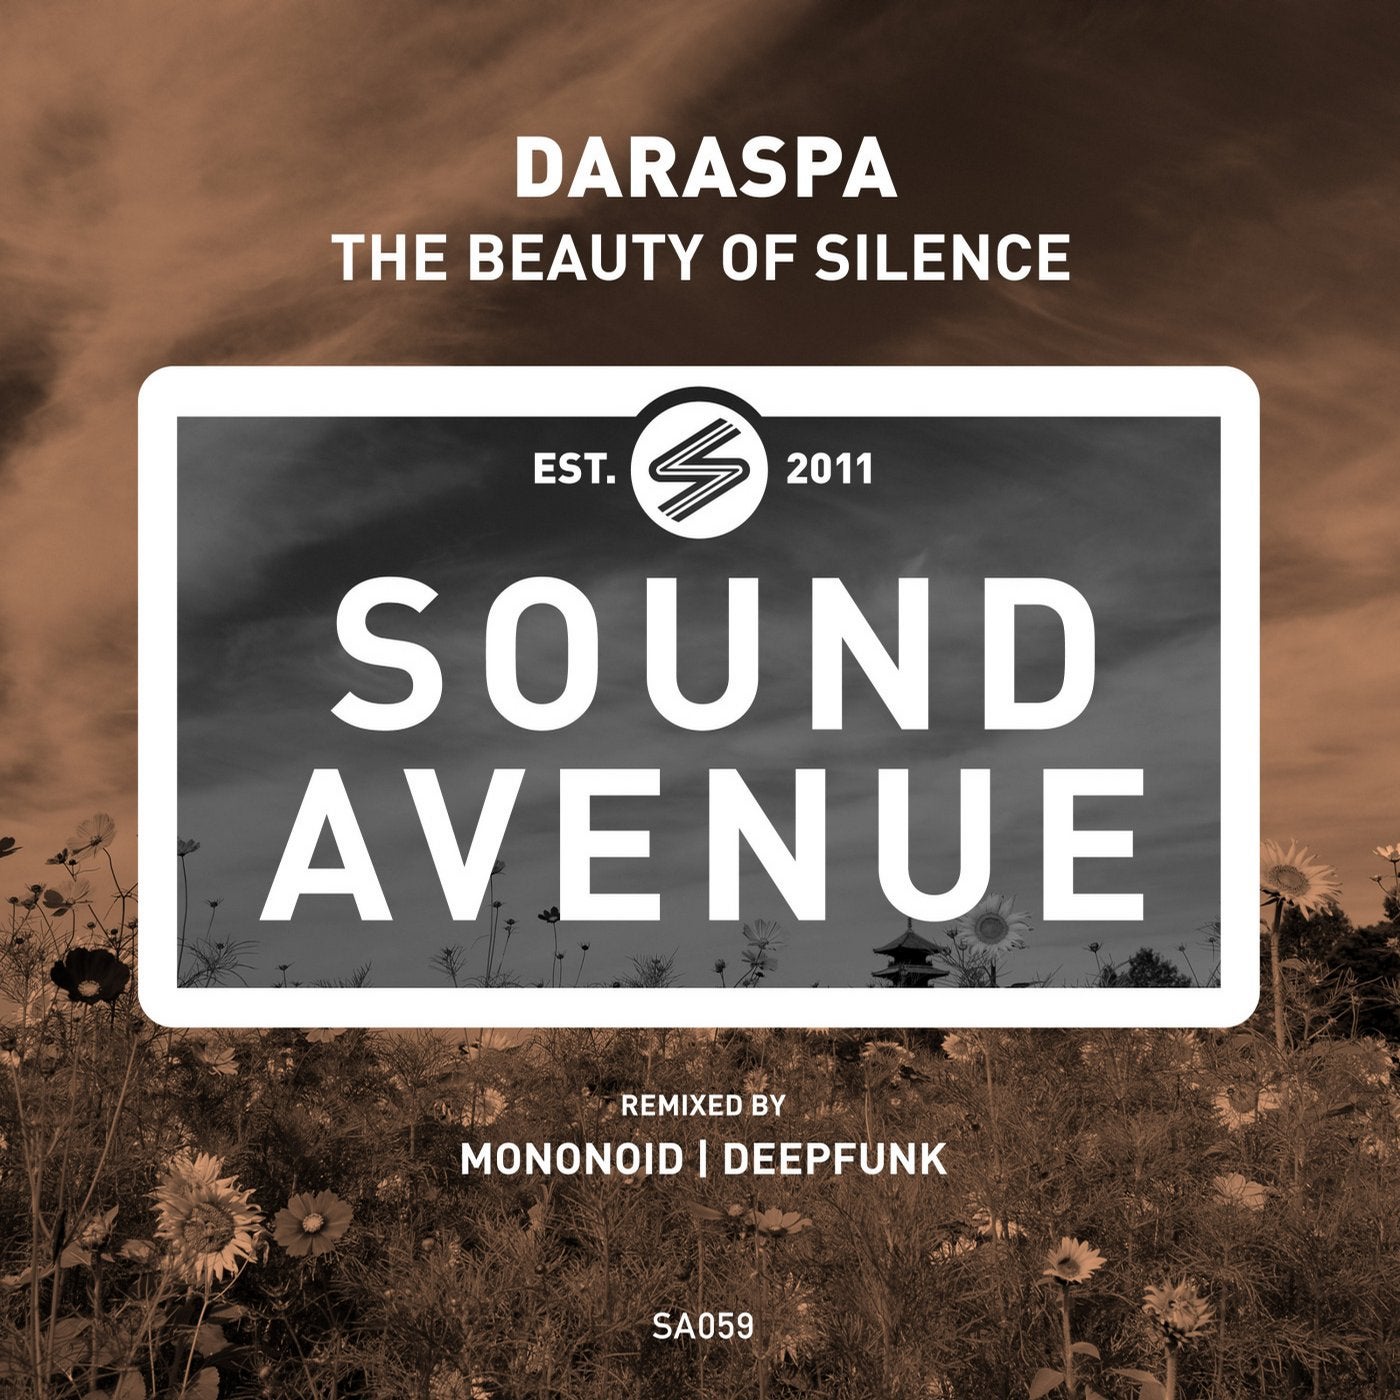 Soja Beauty in the Silence. Sasha Deepfunk Remix перевод. The sound of silence слушать